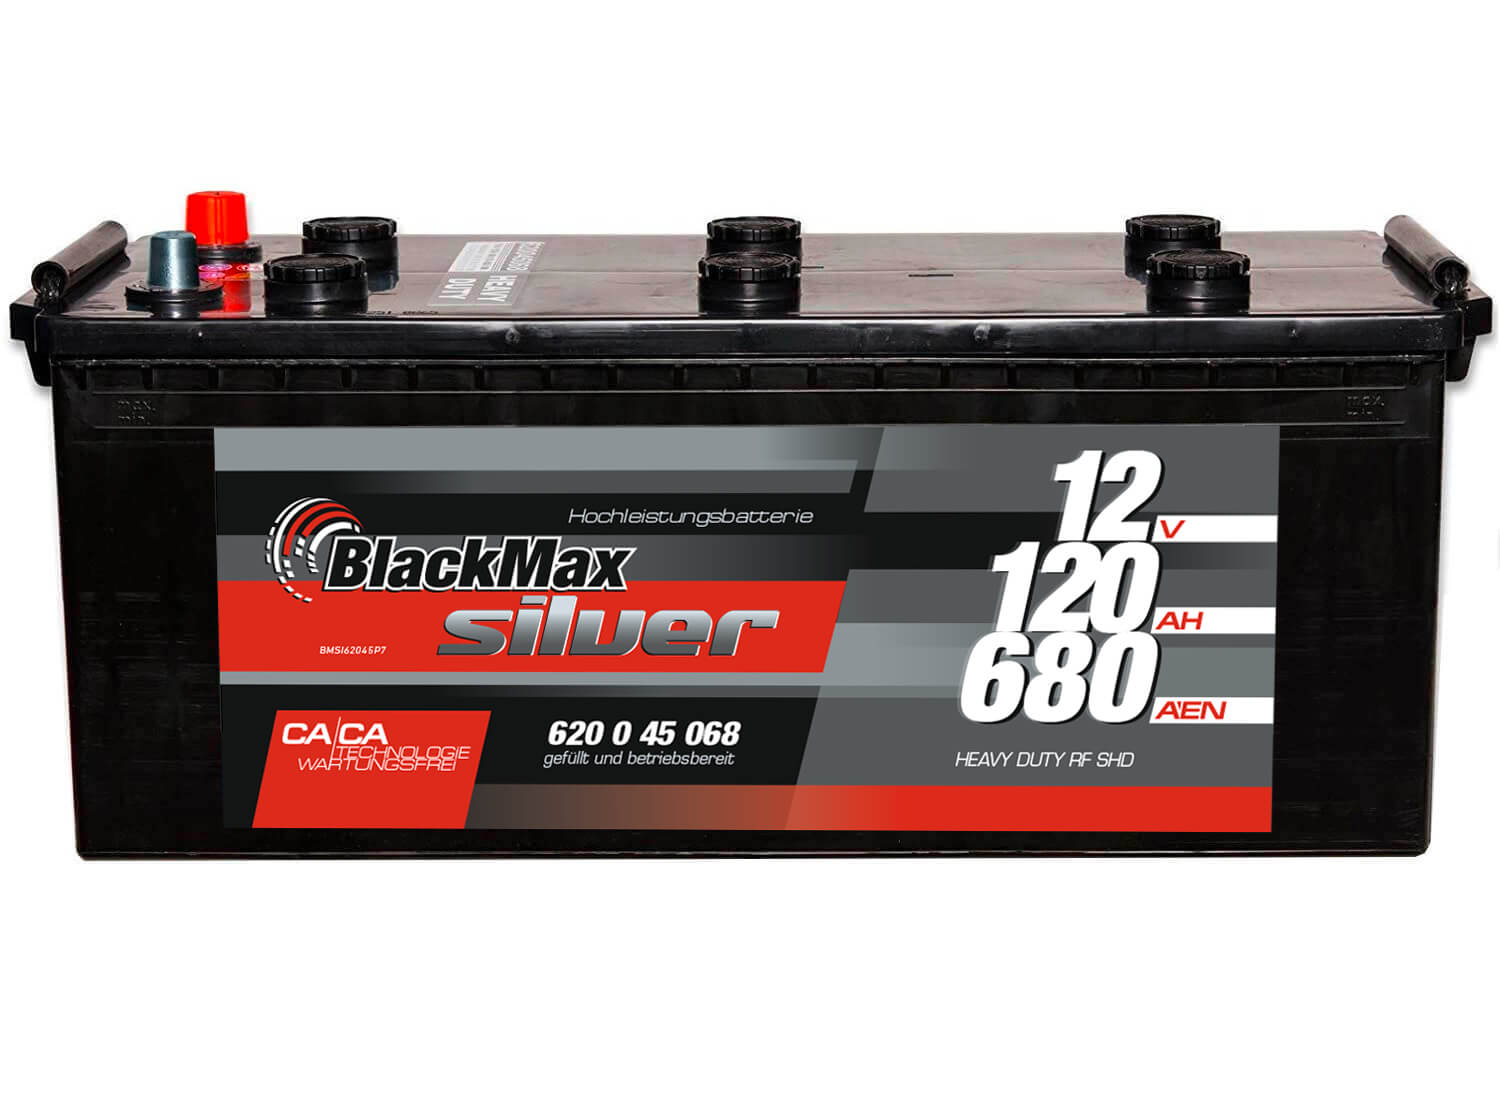 BlackMax Silver 62045 12V 120Ah 680A/EN